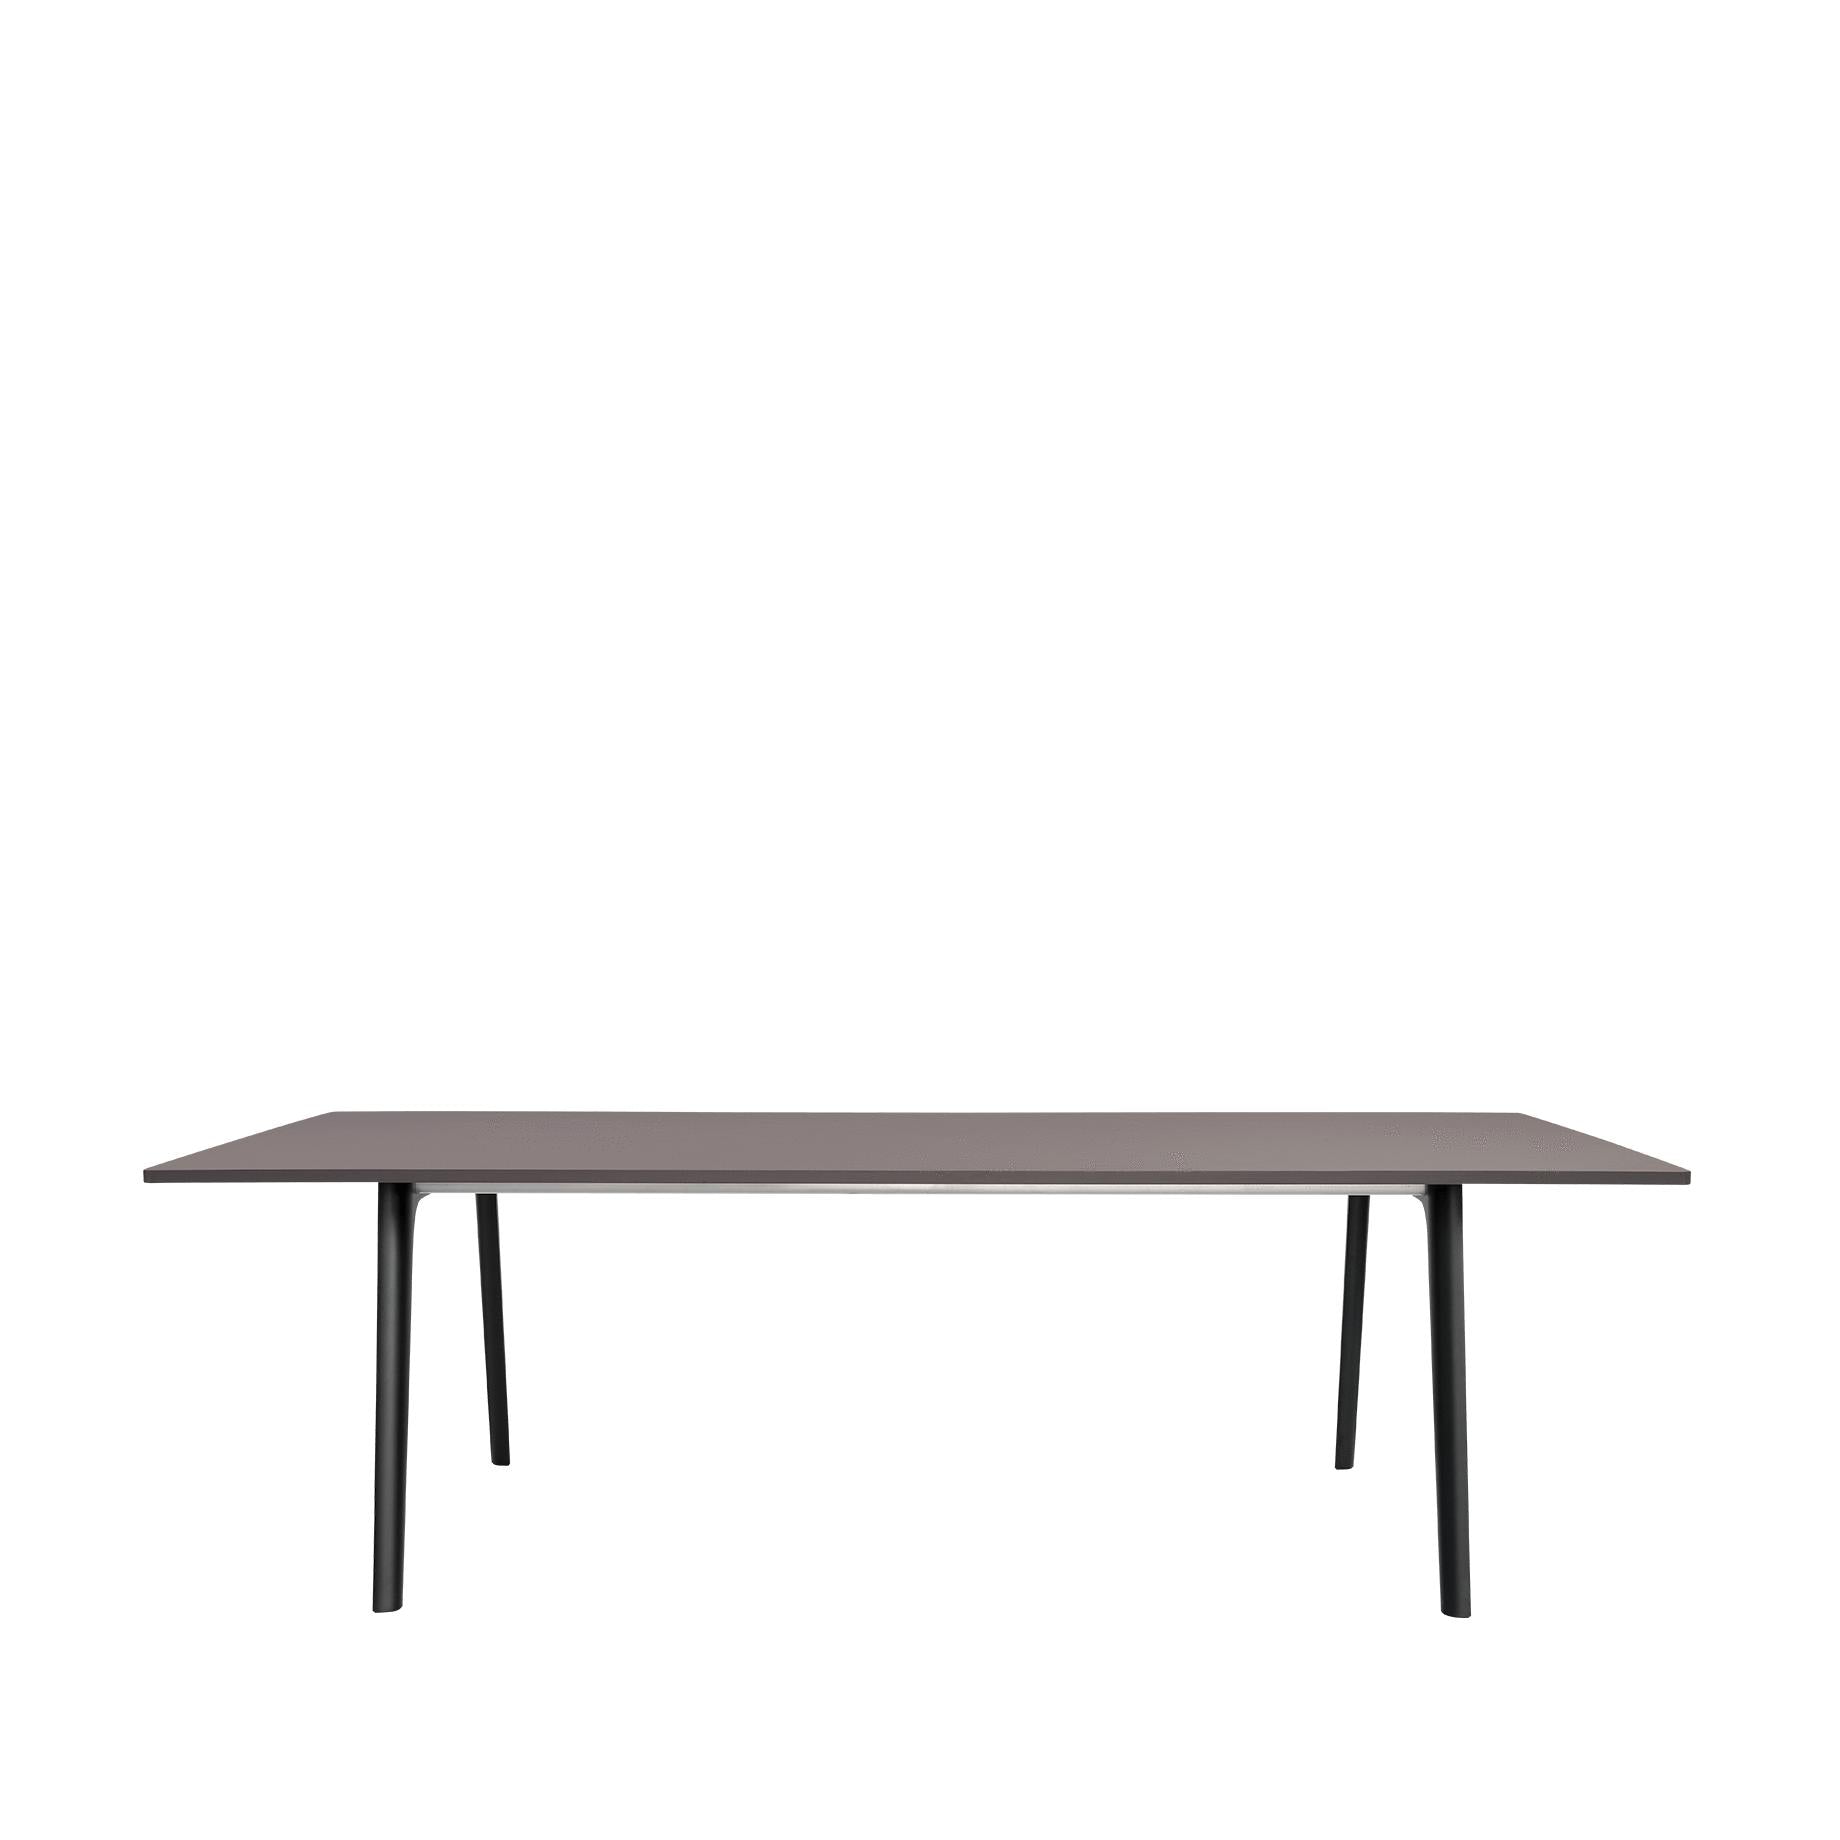 Fritz Hansen collect table powered报道了铝，淡褐色棕色层压板